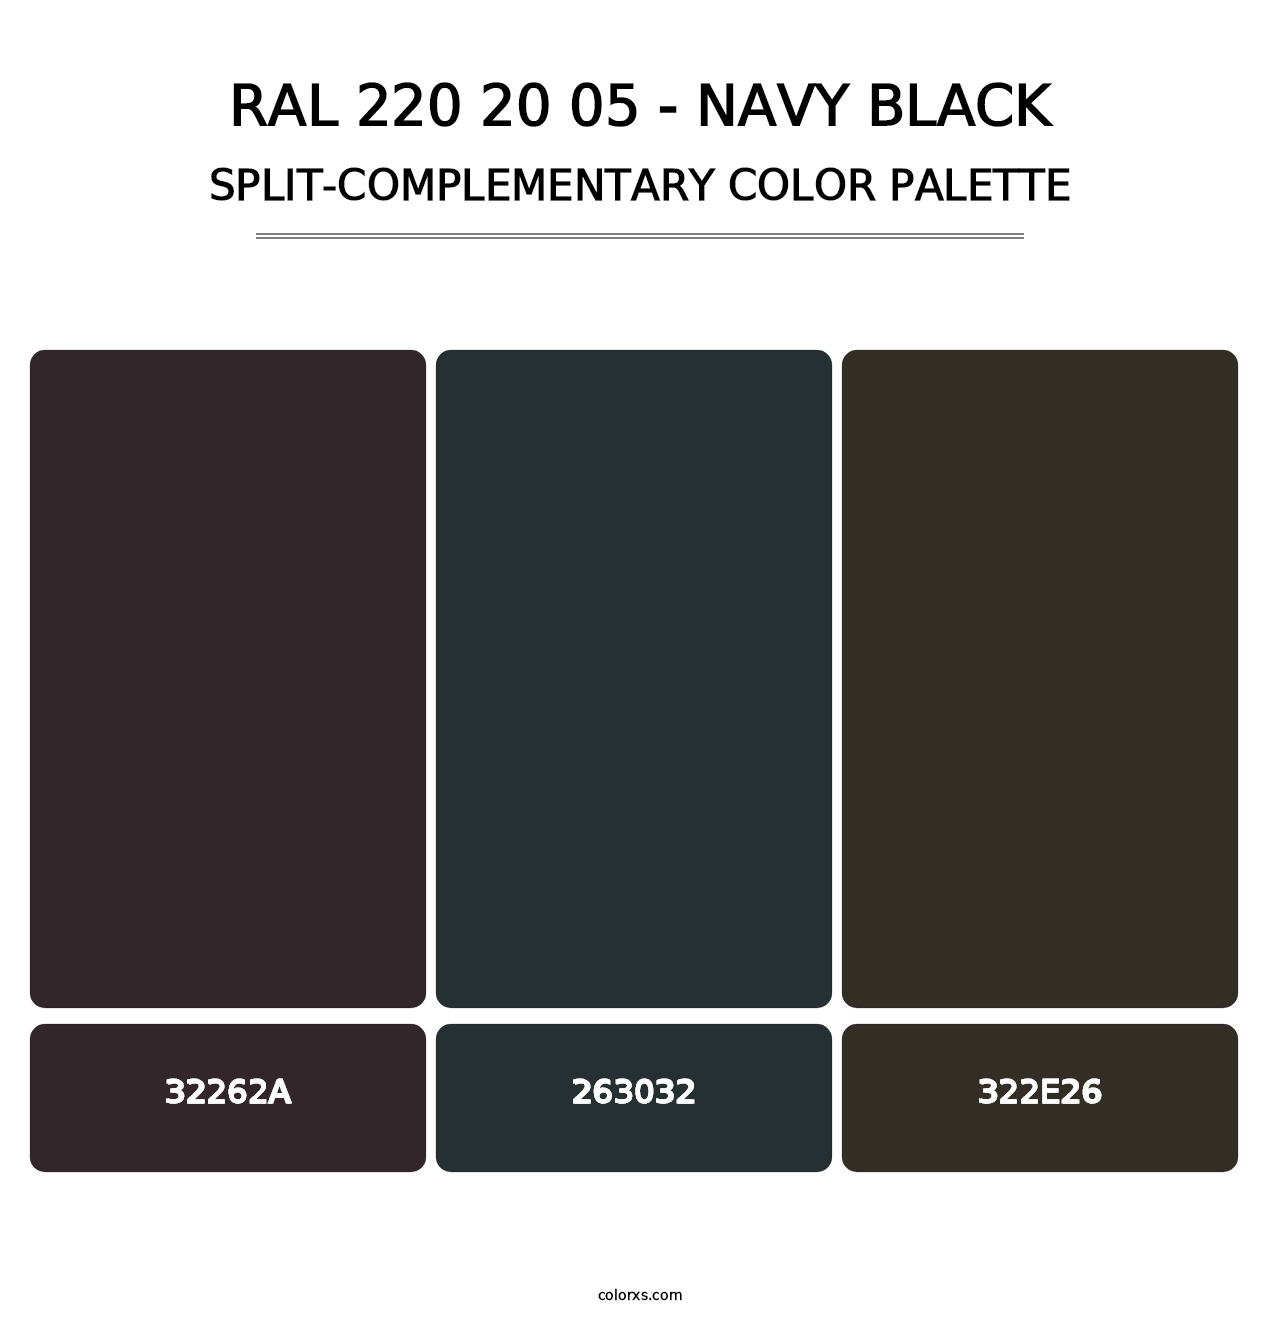 RAL 220 20 05 - Navy Black - Split-Complementary Color Palette